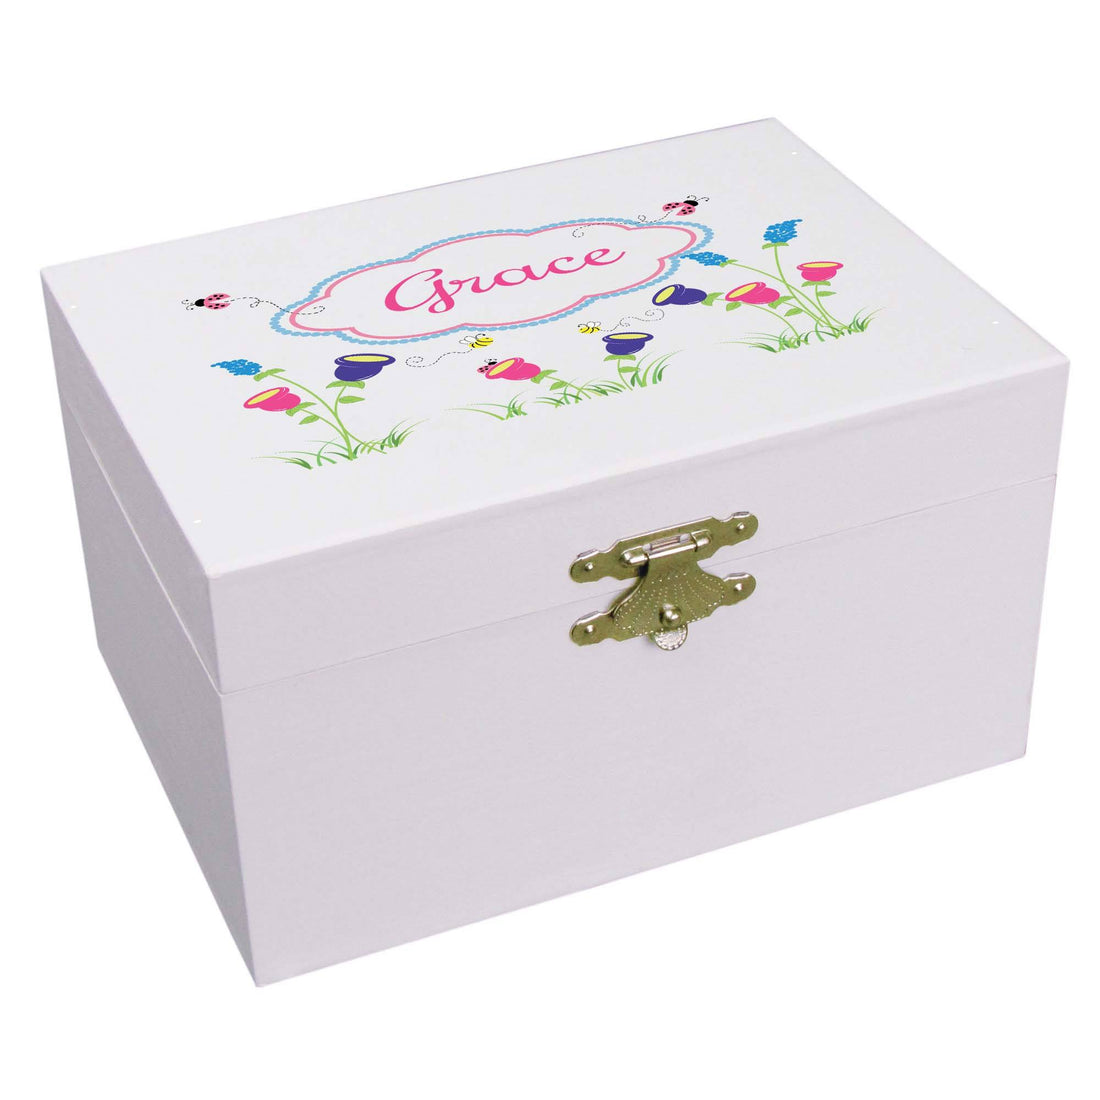 Personalized Ballerina Jewelry Box with English Garden design